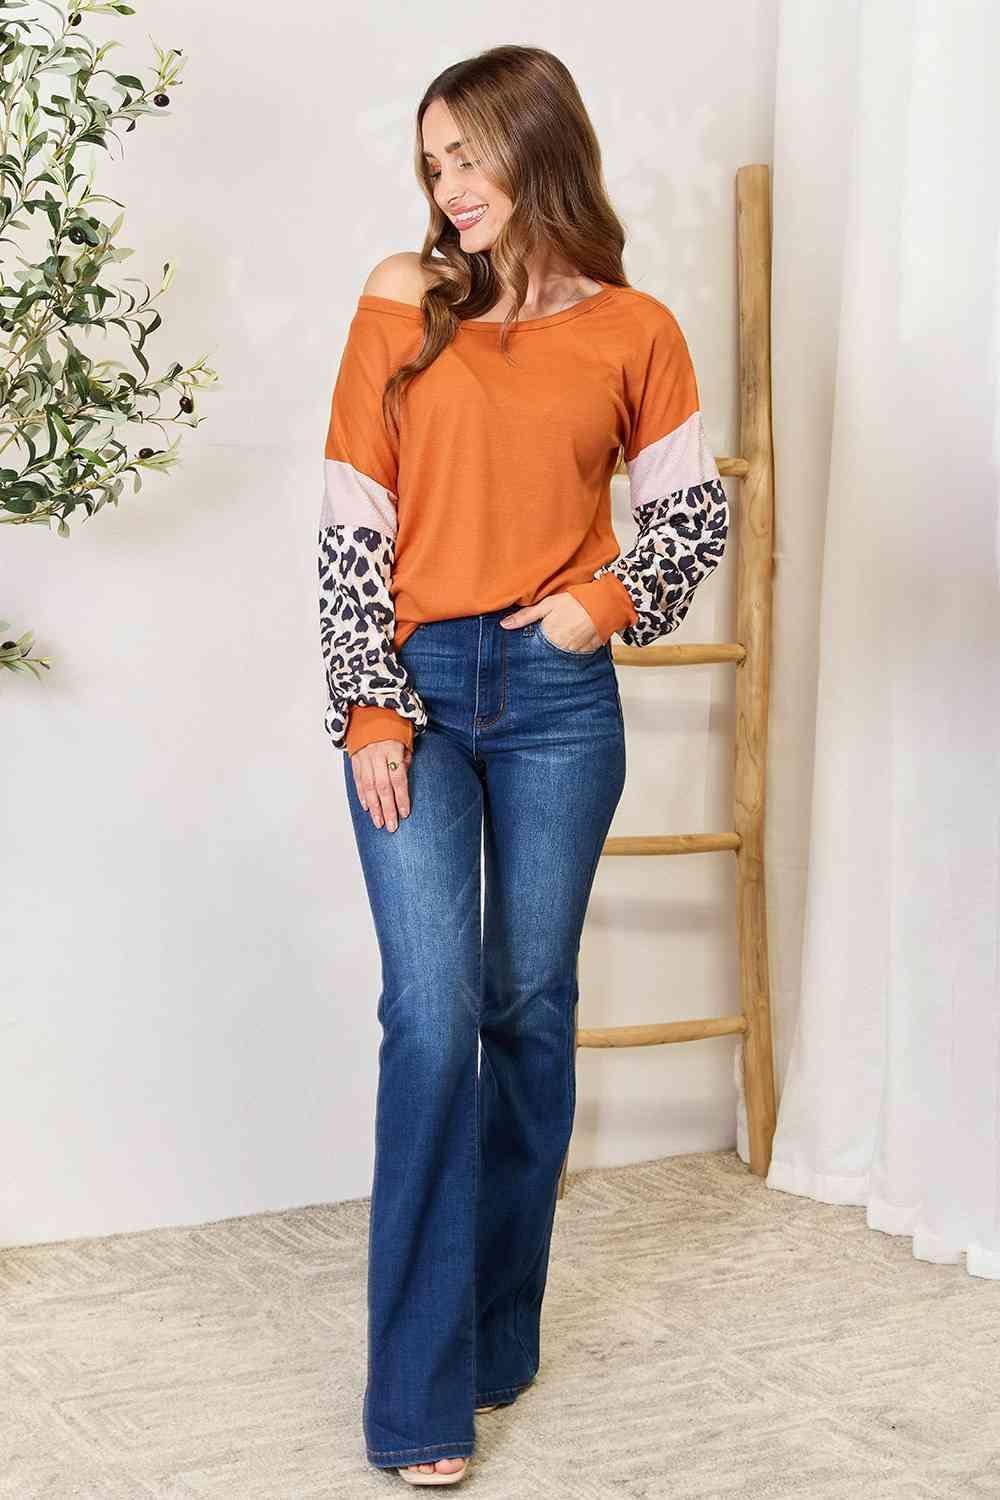 Bona Fide Fashion - Leopard Long Sleeve Round Neck Sweatshirt - Women Fashion - Bona Fide Fashion